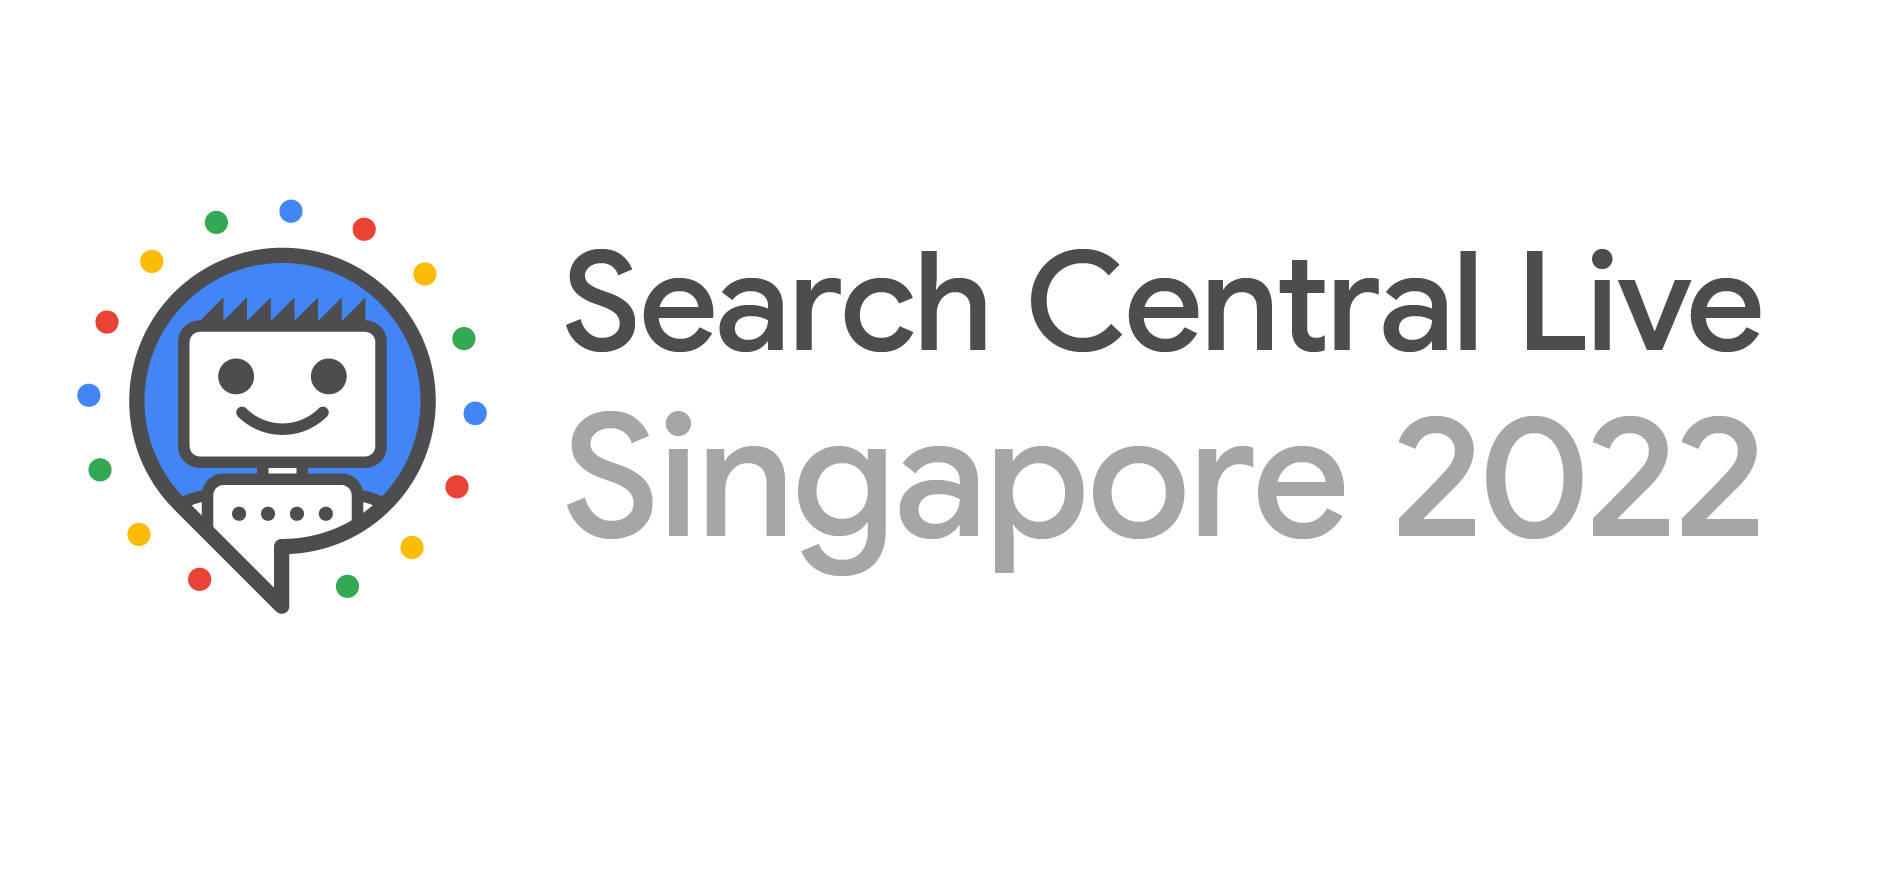 Search Central Live Singapore 2022 Logo